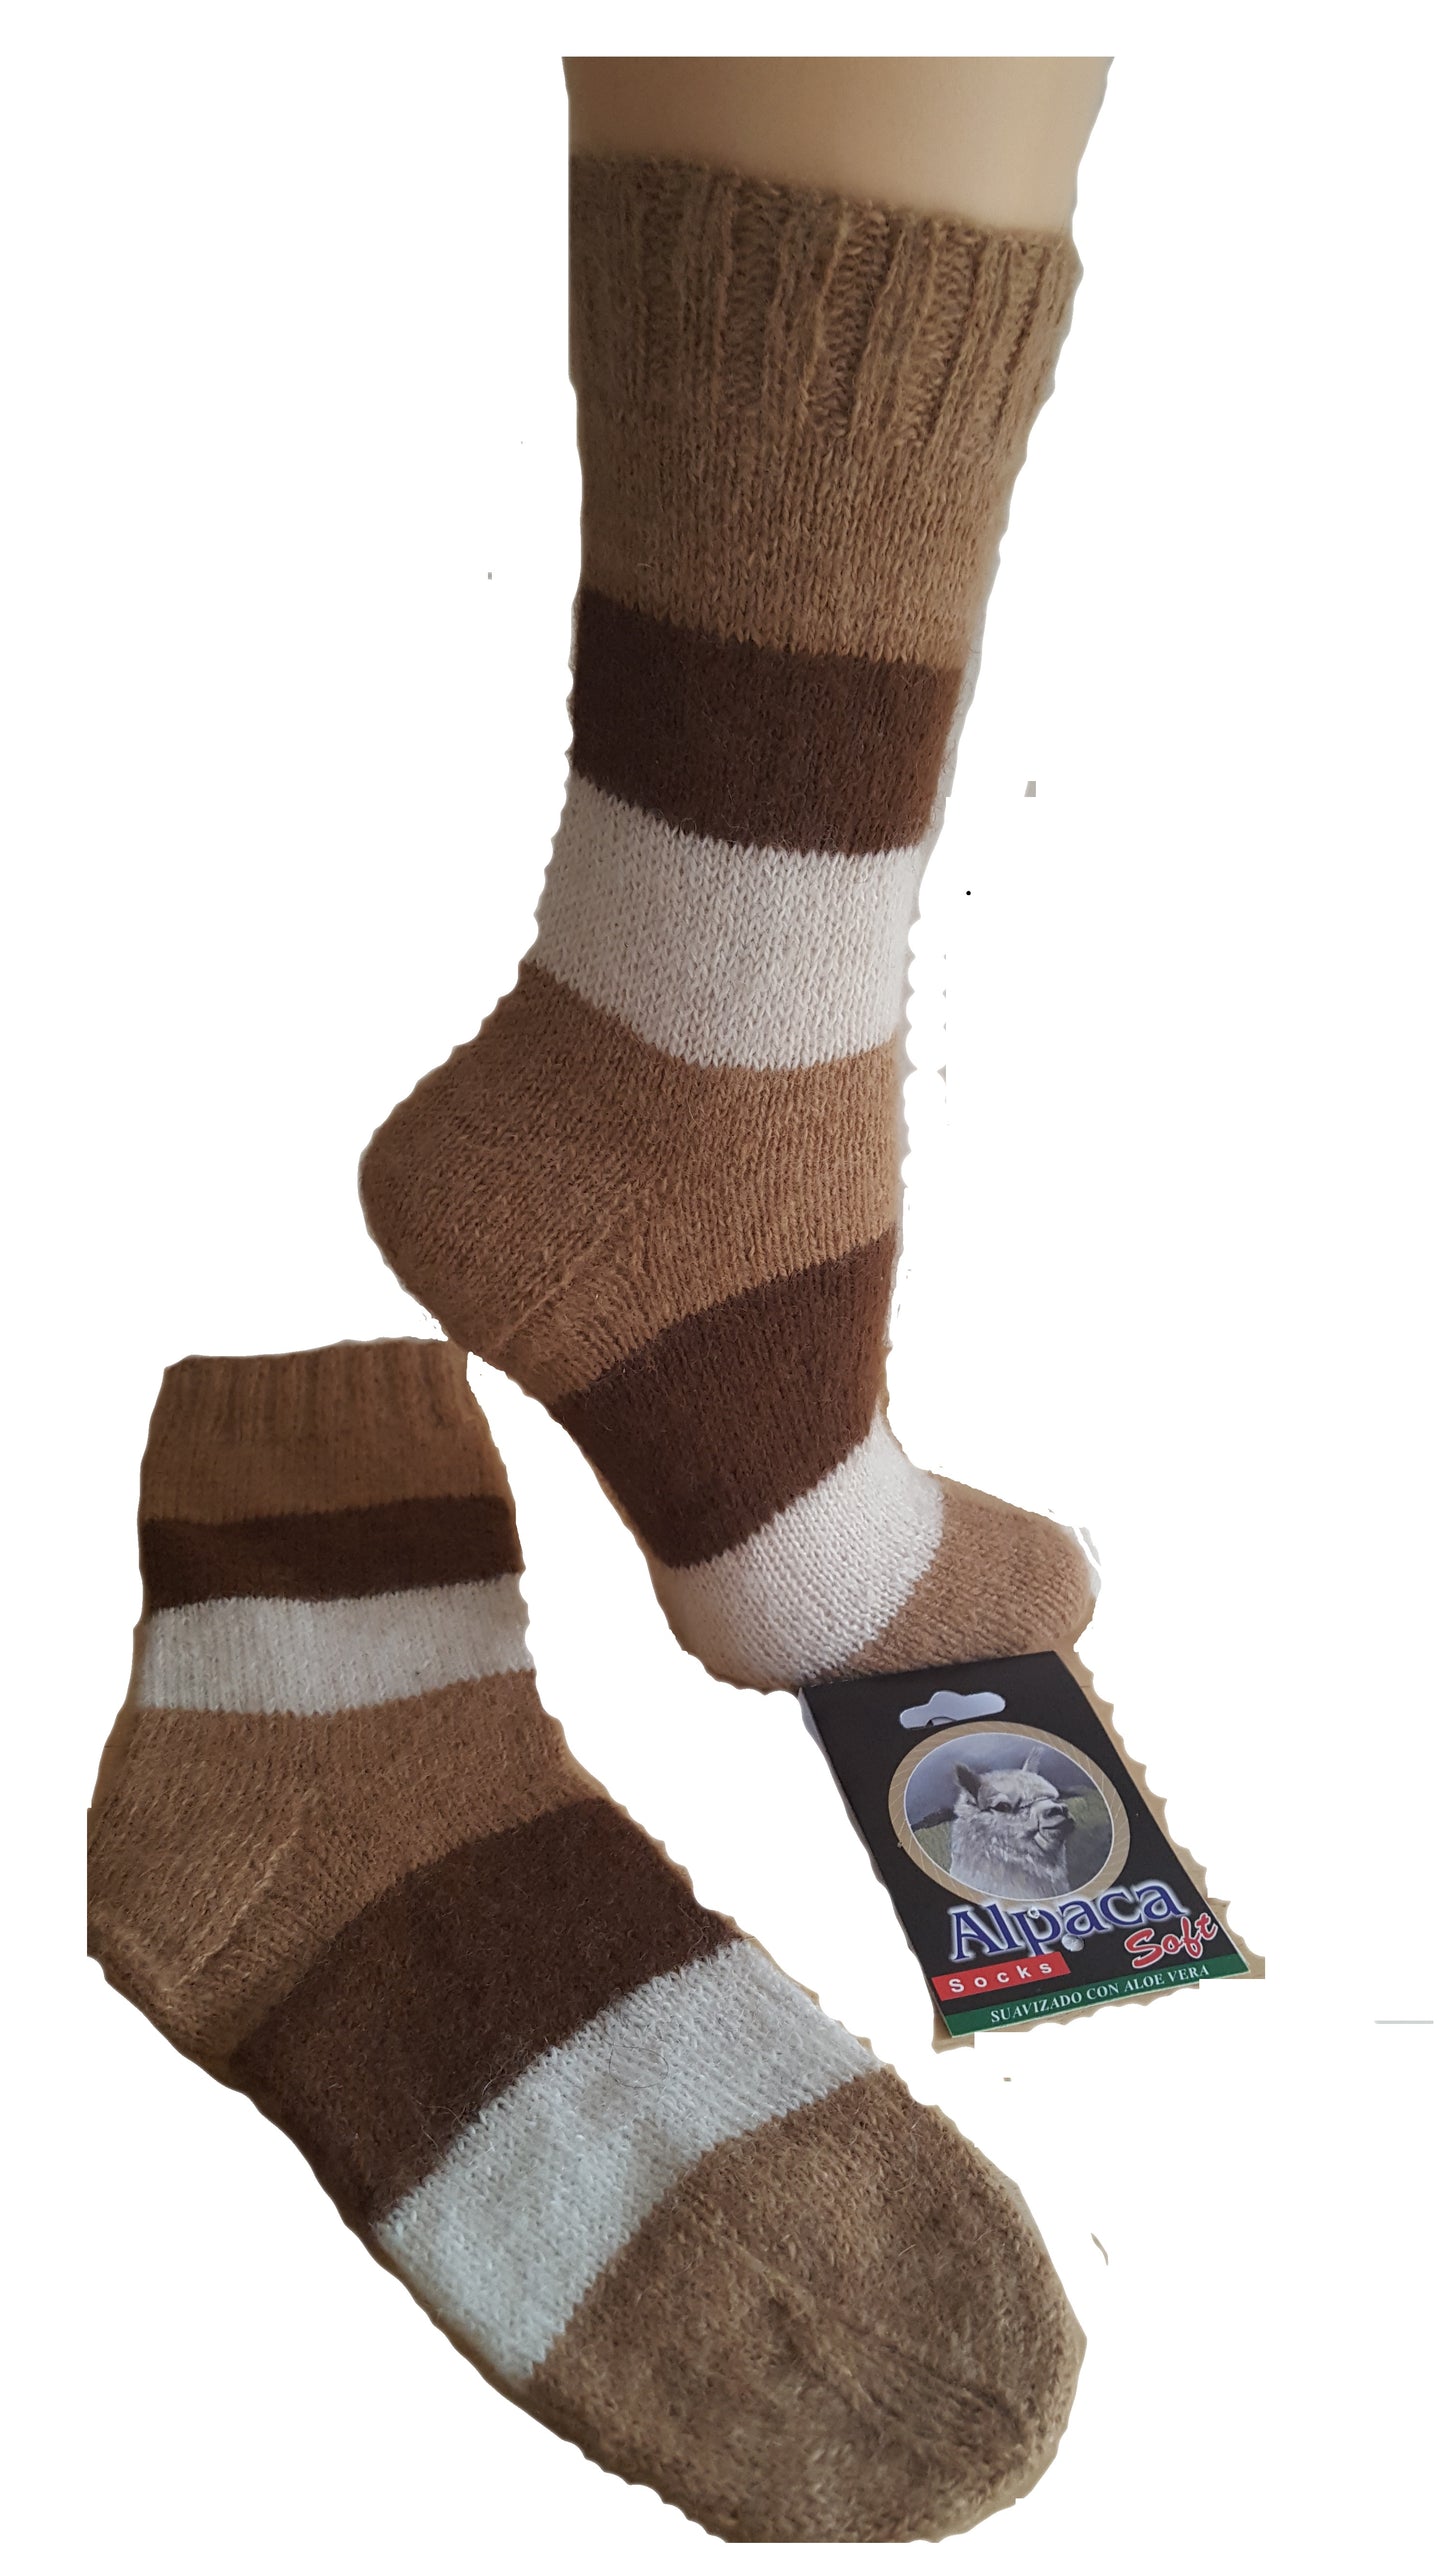 Handknit Alpaca Socks 'Unisex